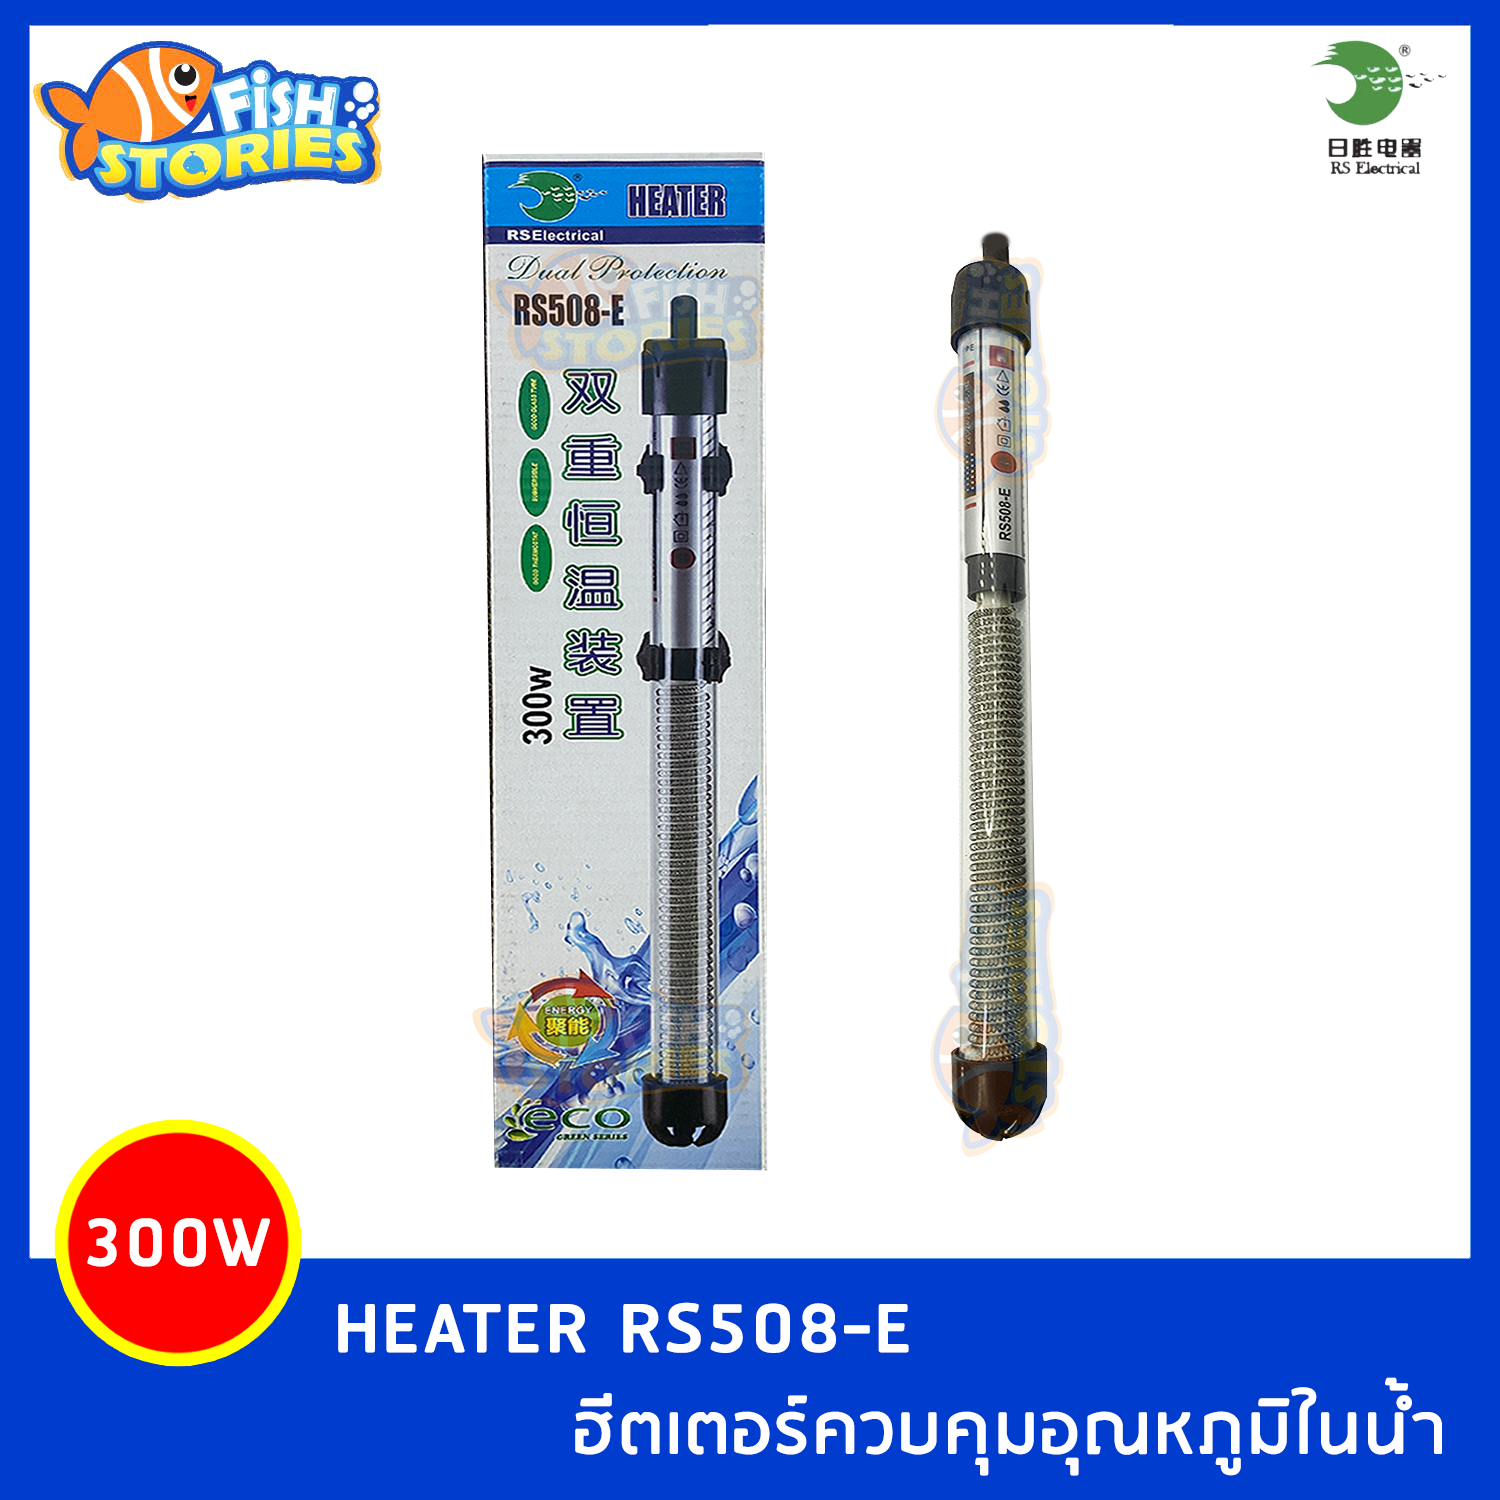 RS Electrical RS-508E Heater 300W ฮีดเตอร์ เครื่องควบคุมอุณหภูมิน้ำในตู้ปลาขนาด 48-60นิ้ว